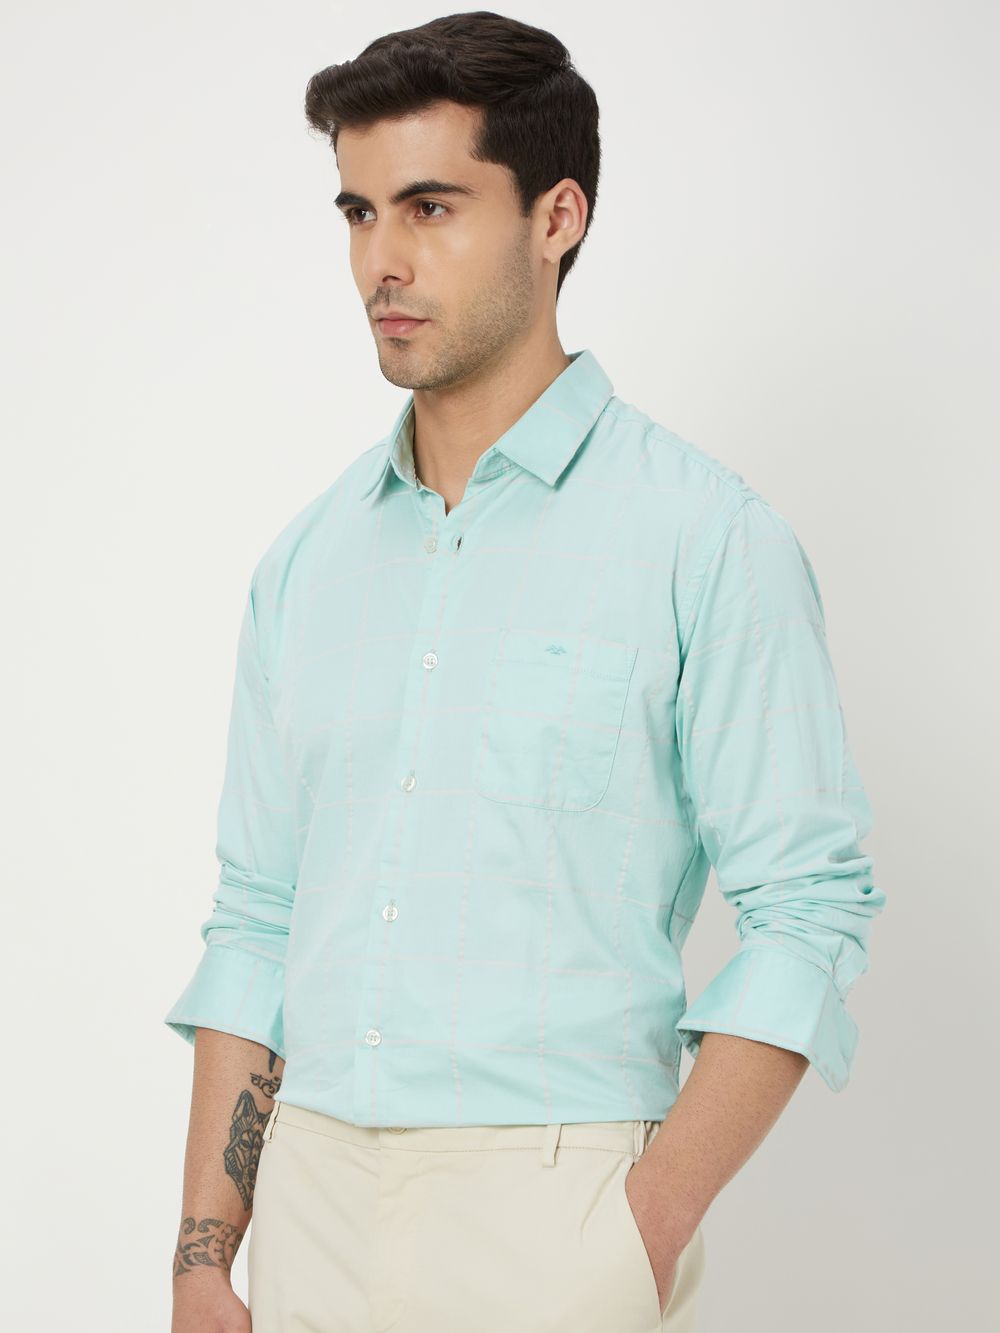 Turquoise & White Printed Check Shirt